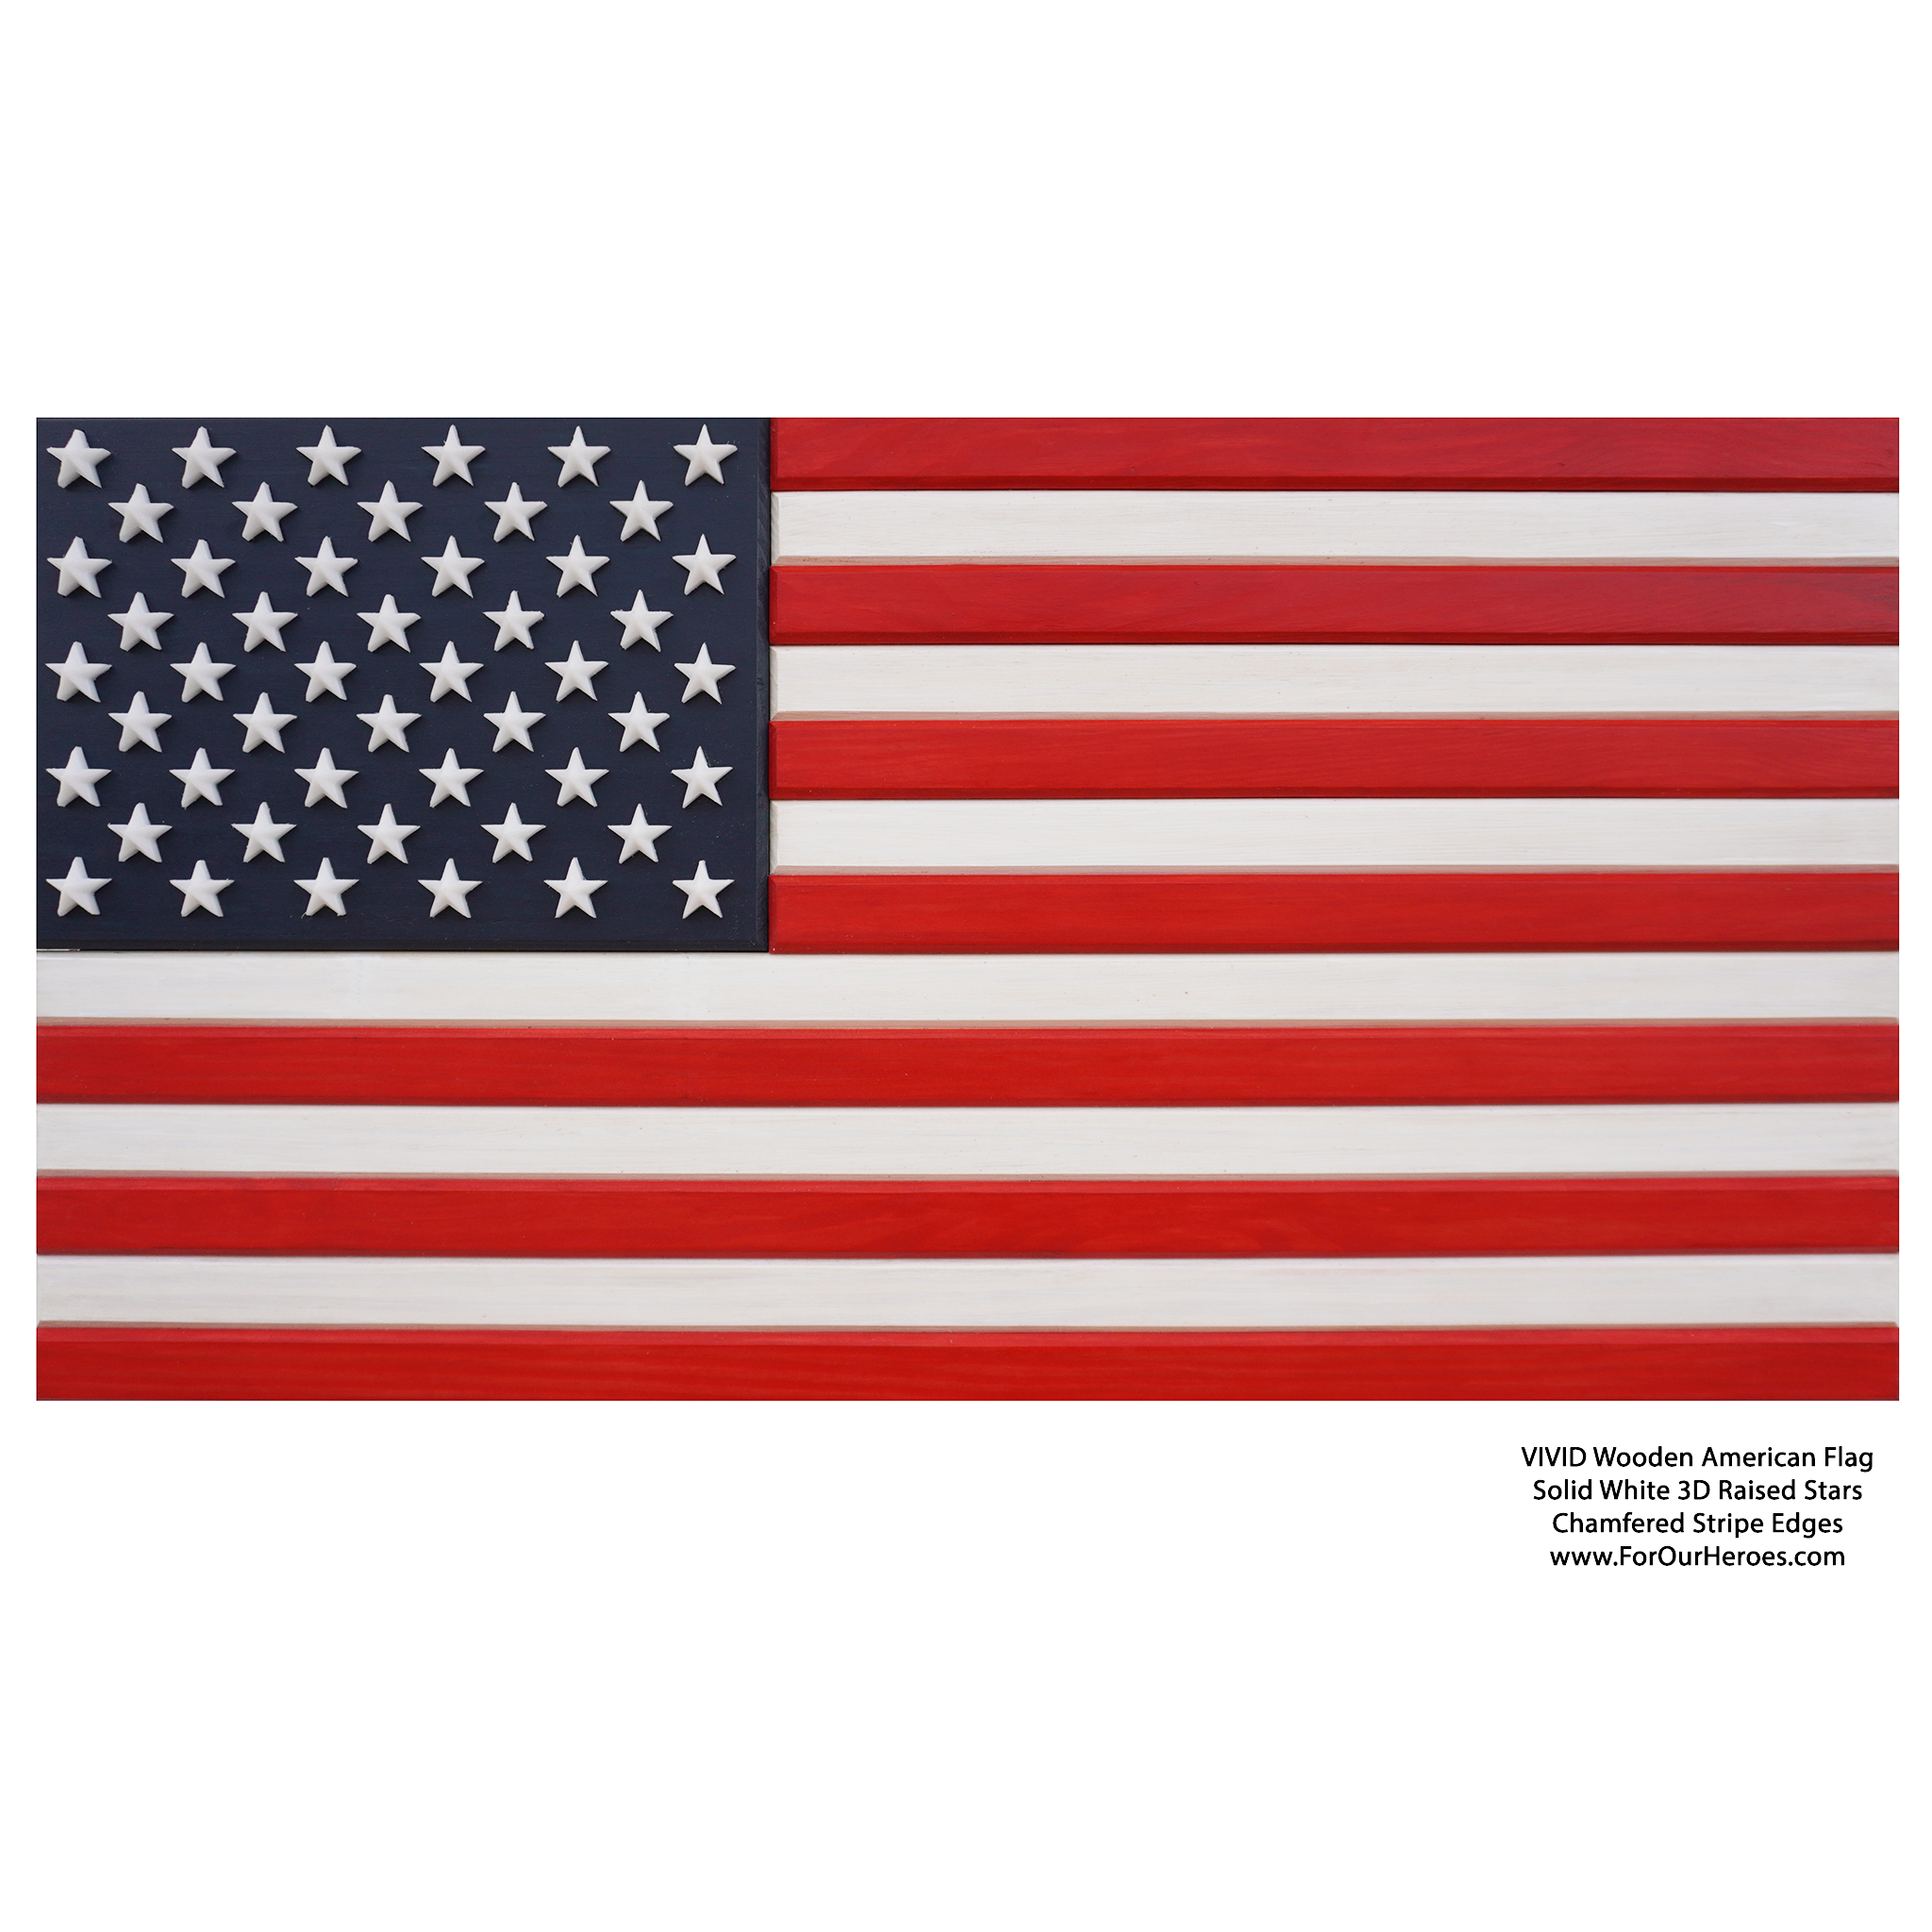 2D VIVID American Flag-2